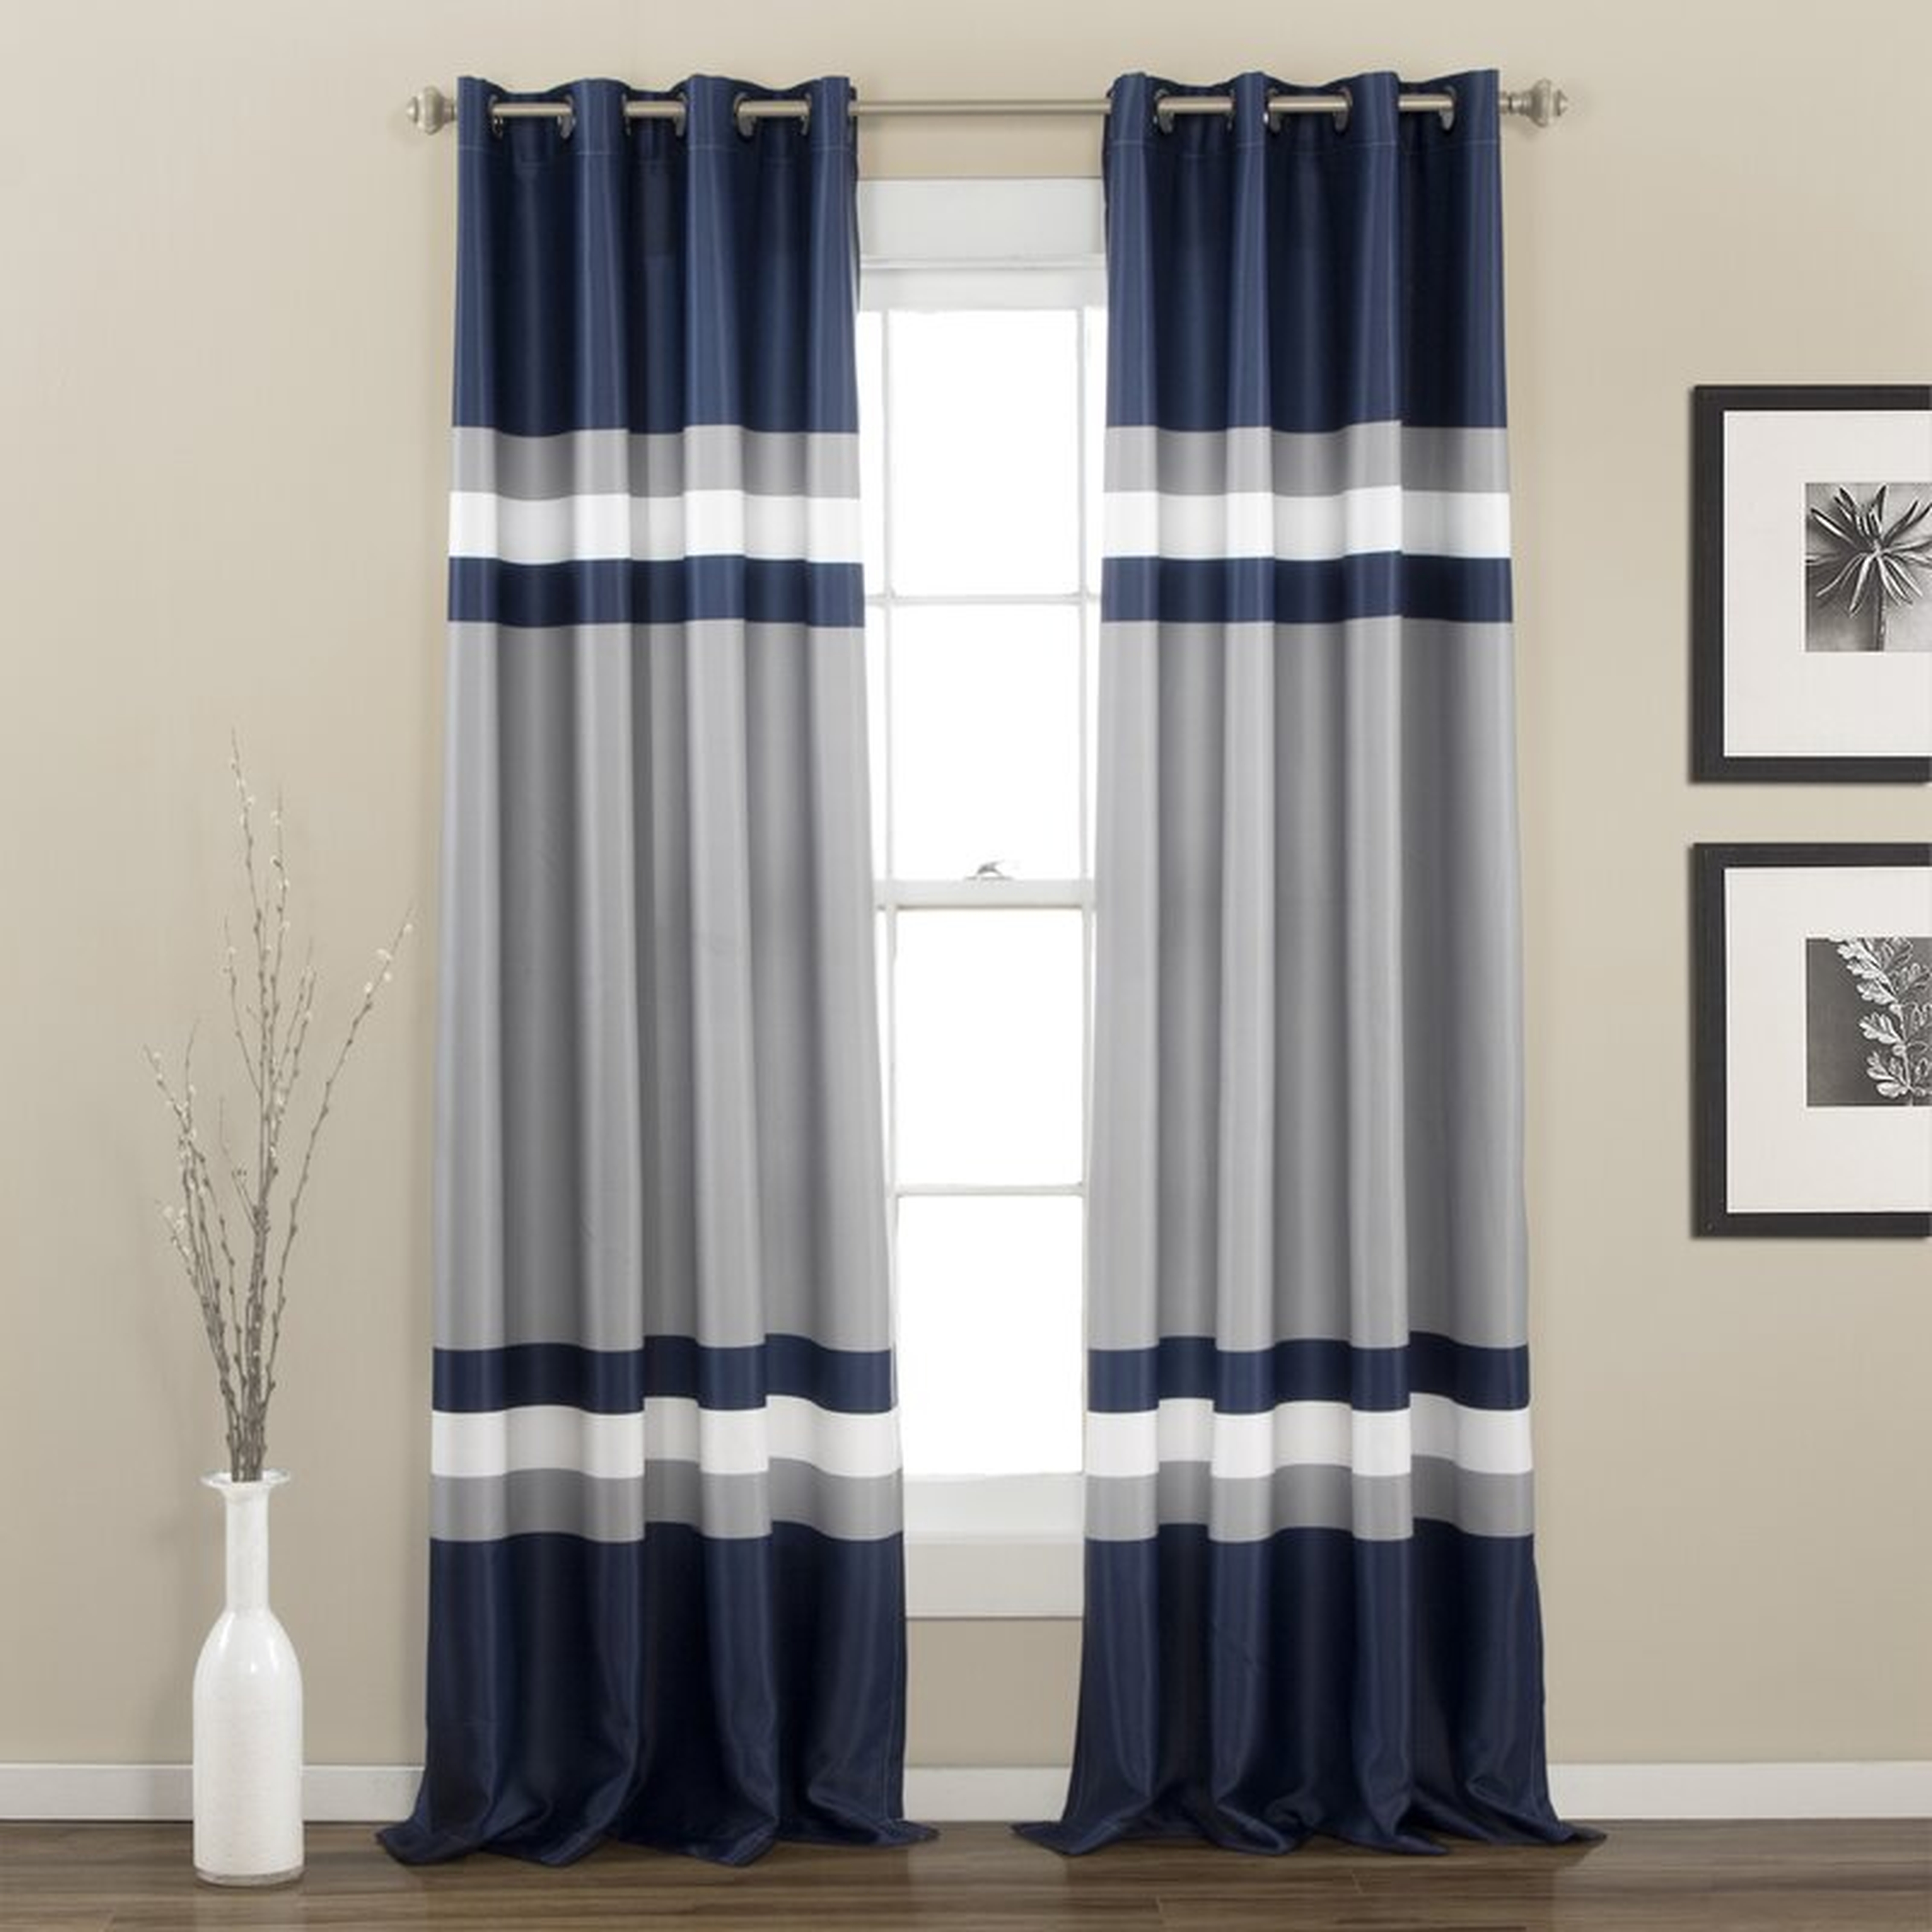 Reedsville Striped Room Darkening Thermal Grommet Curtain Panels (Set of 2), Navy - Wayfair